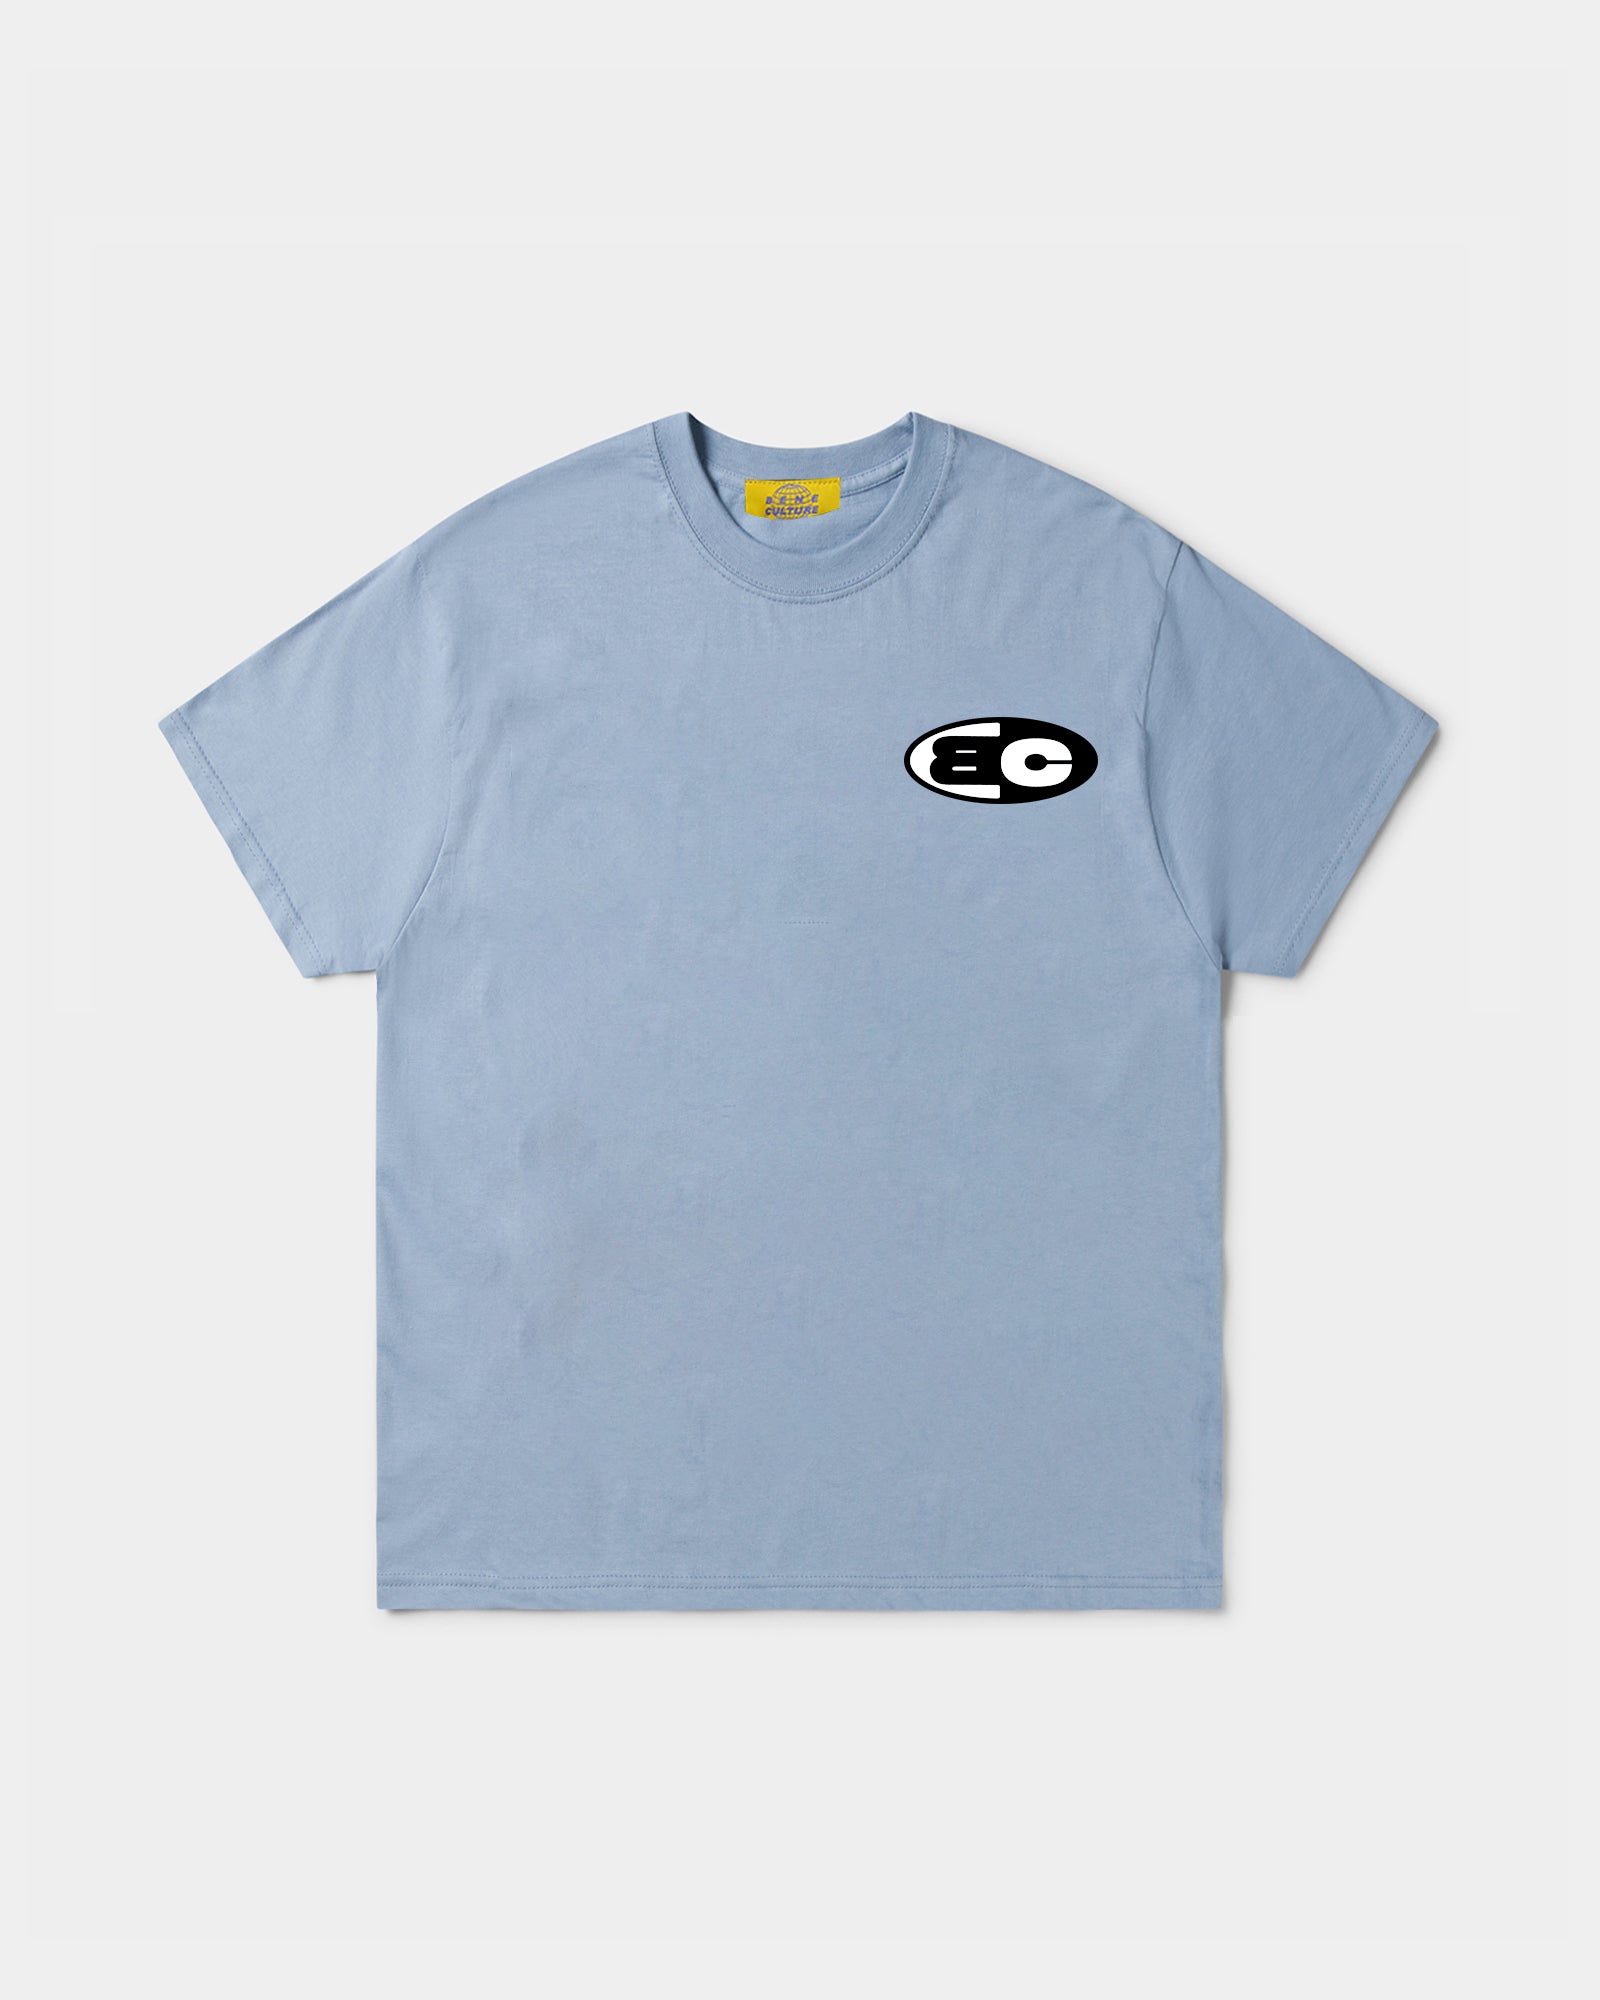 Cult T-Shirt (Baby Blue)